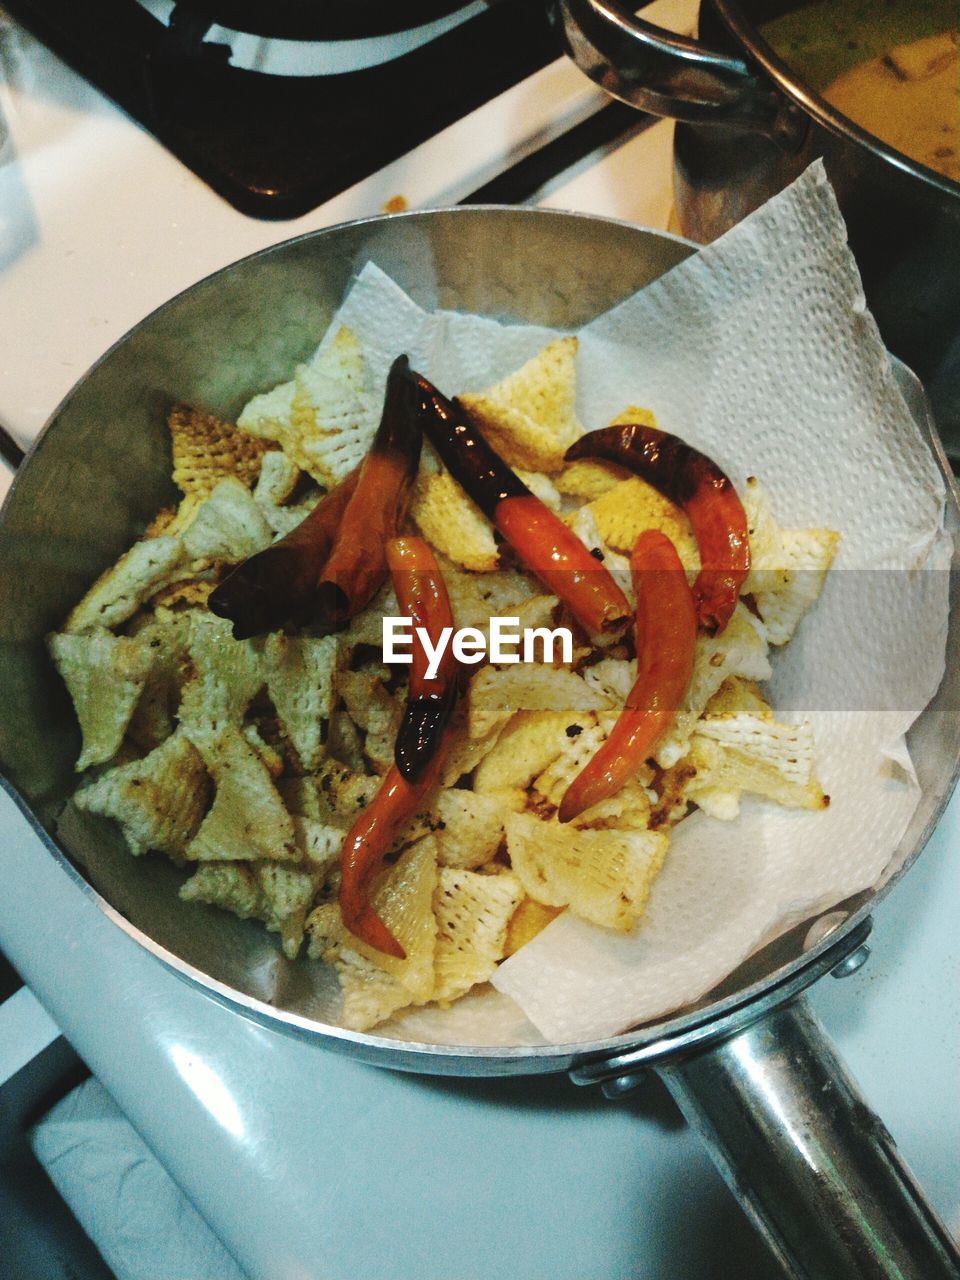 Nacho chips in frying pan